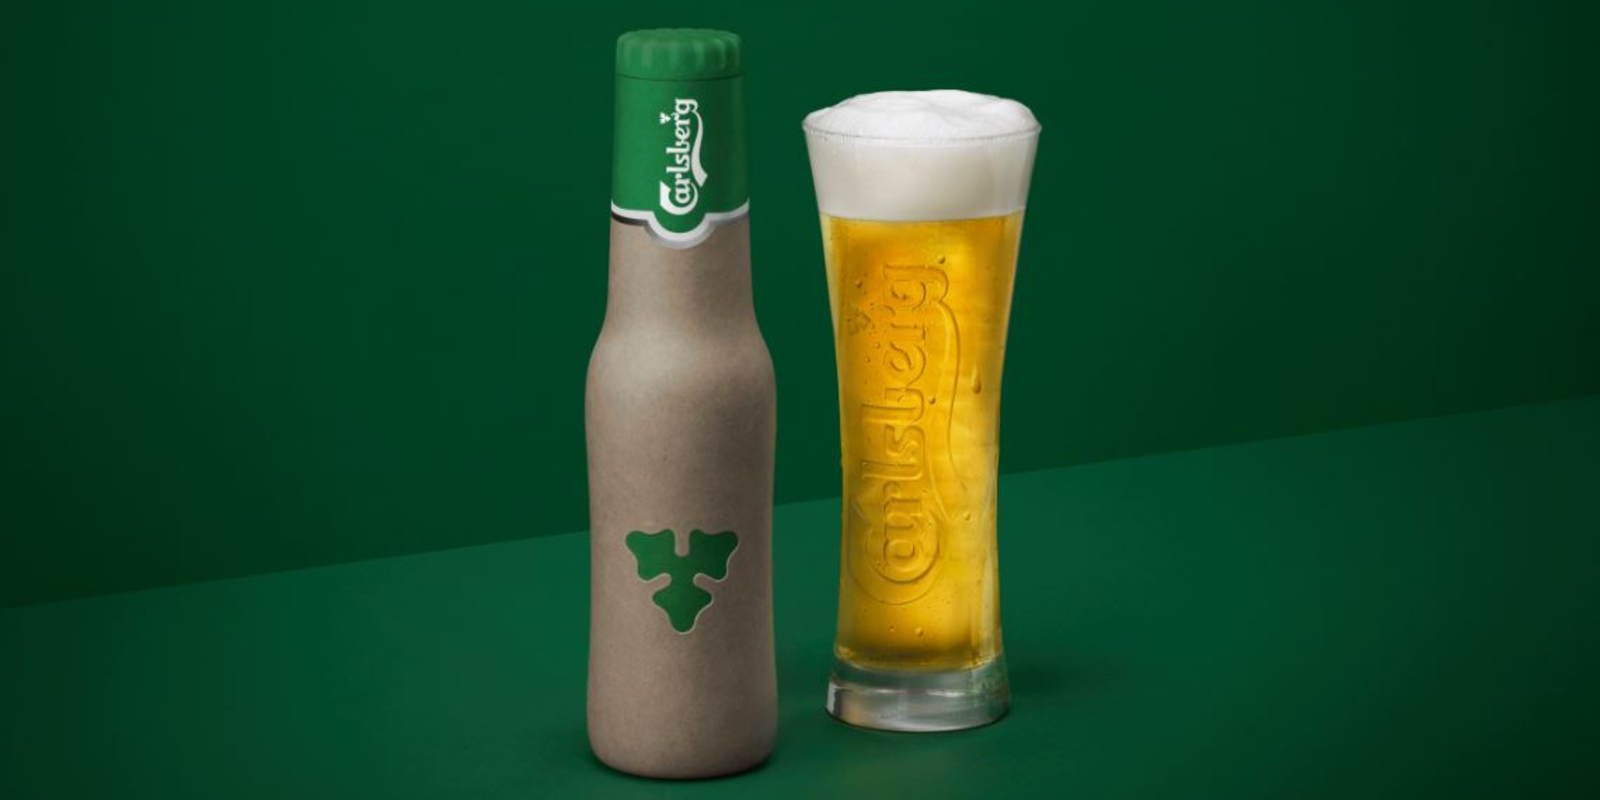 Sustainability Through Open Innovation: Carlsberg and the Green Fiber Bottle